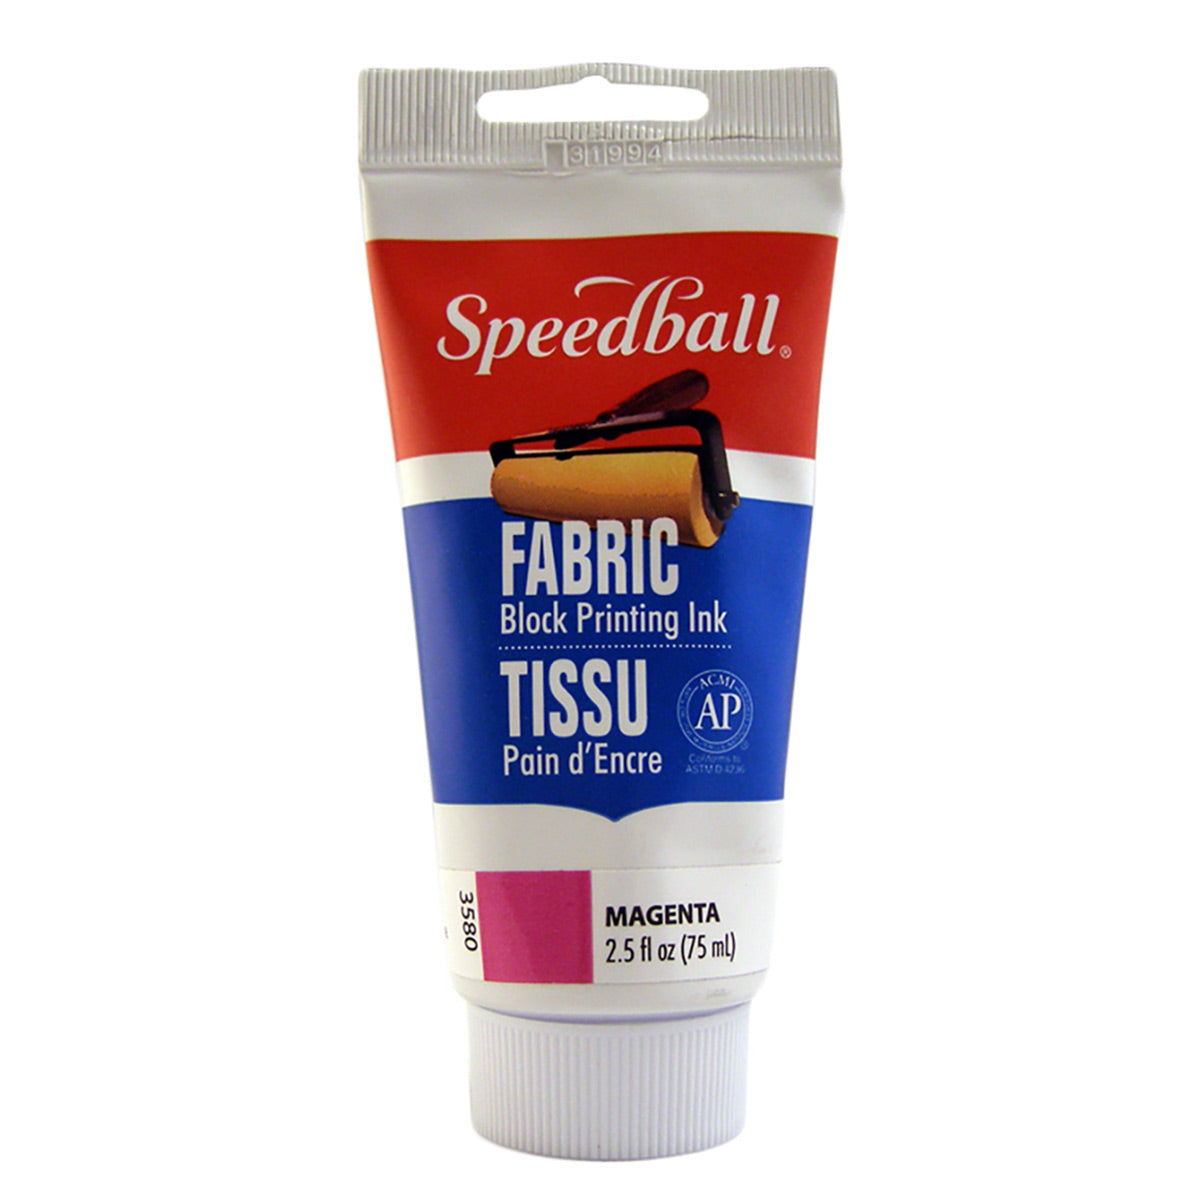 Speedball - Fabric Block Printing Ink 75ml (2,5 oz) - Magenta